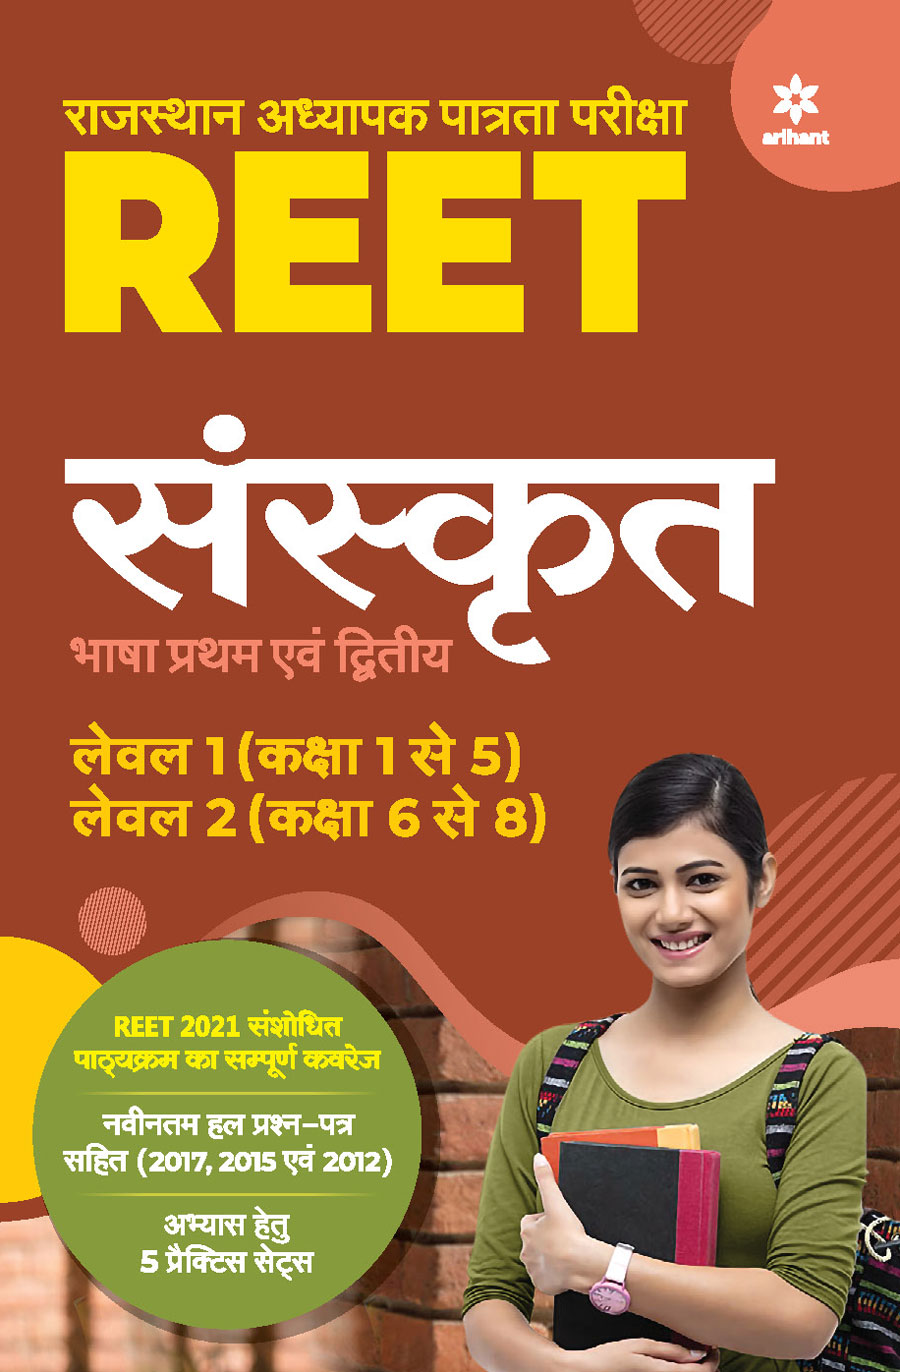 REET Sanskrit Level 1 ( Class 1-5) and Level 2 (Class 6-8) for 2021 Exam